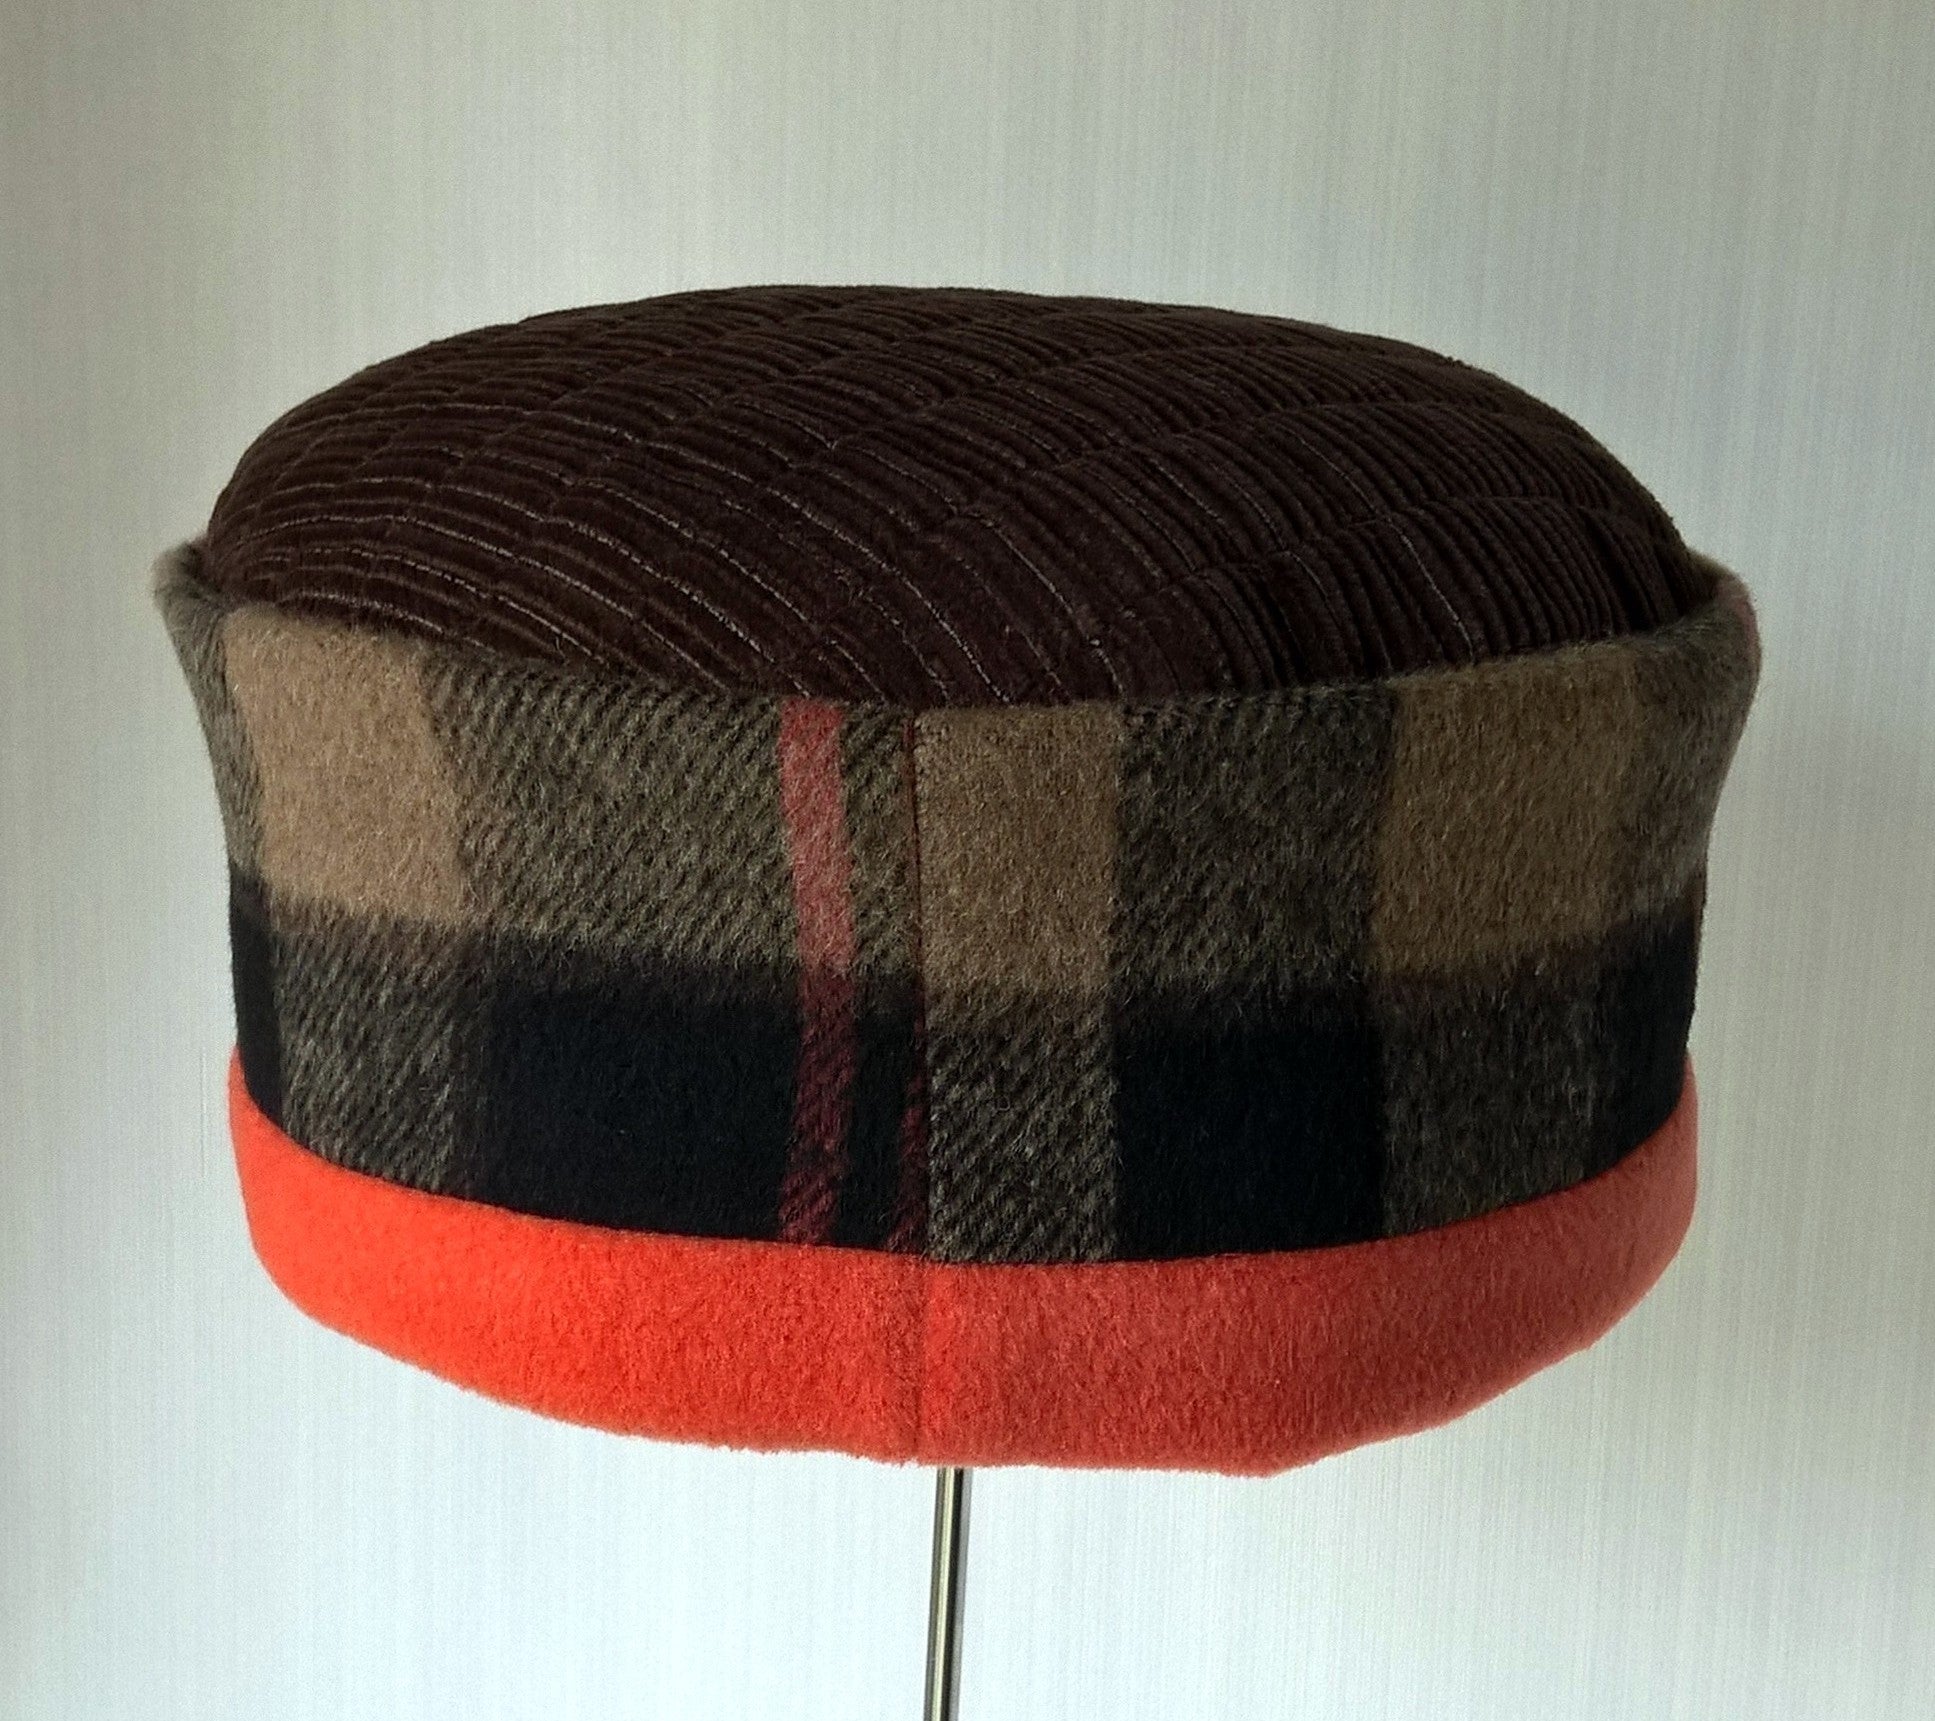 Brown and orange check fleece cap with corduroy